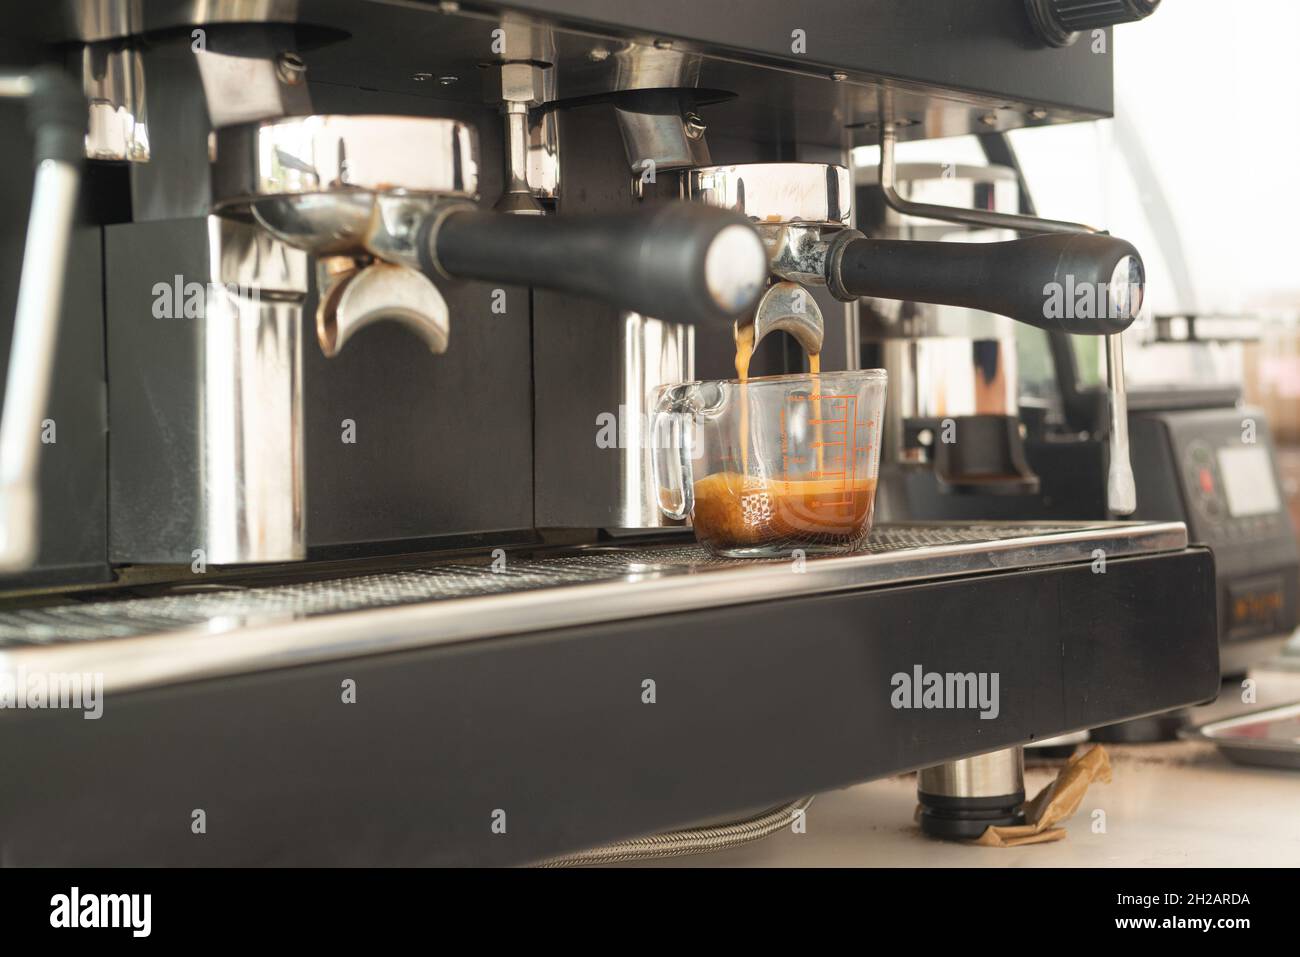 https://c8.alamy.com/comp/2H2ARDA/large-coffee-machine-and-black-mug-while-making-coffee-small-business-concept-2H2ARDA.jpg